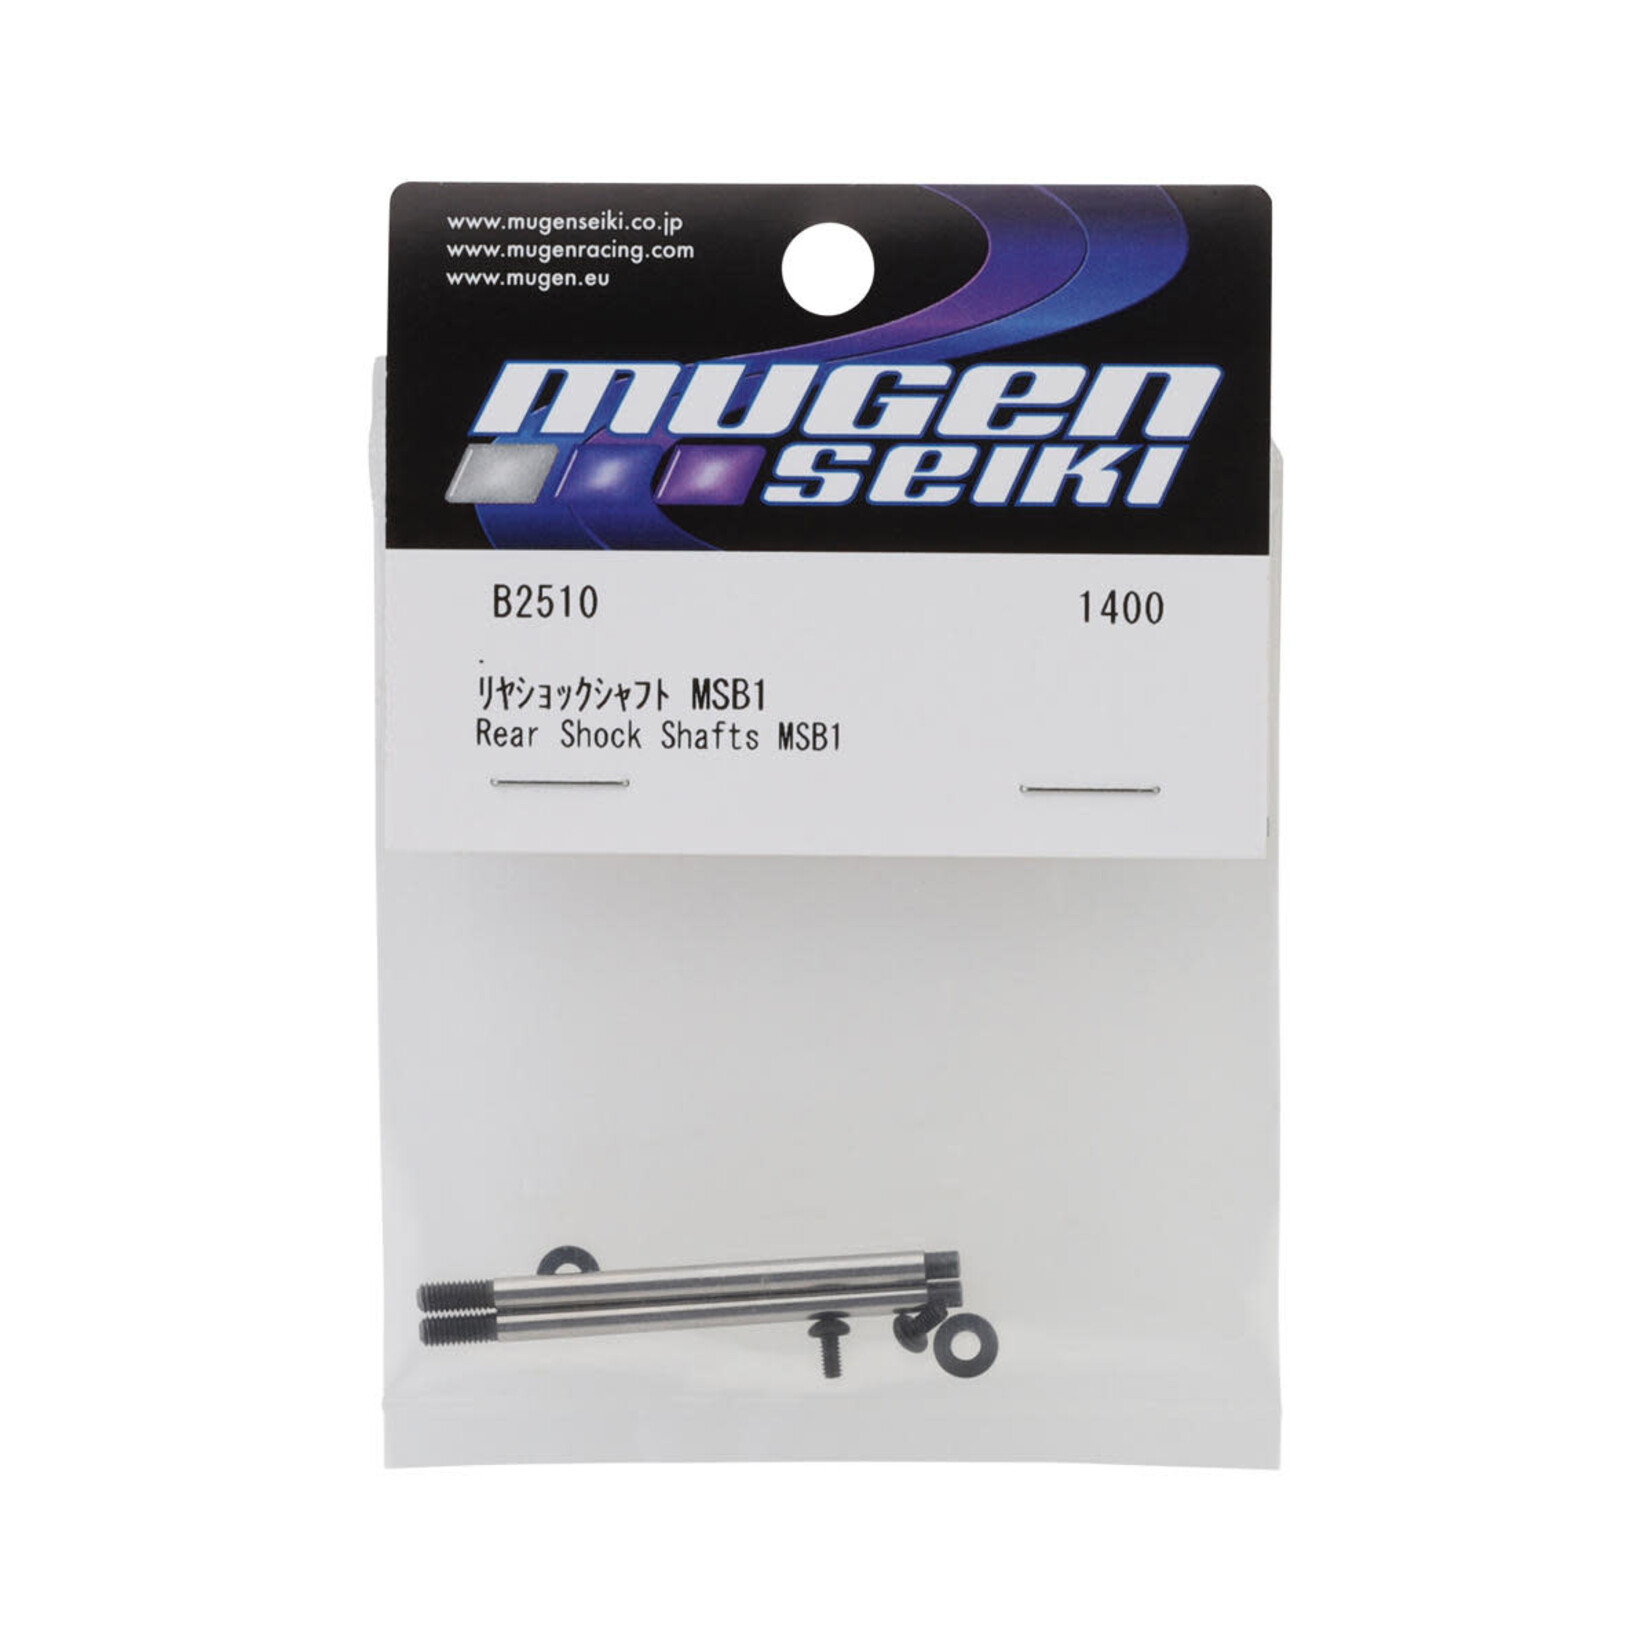 Mugen B2510 Rear Shock Shafts (2pcs): MSB1